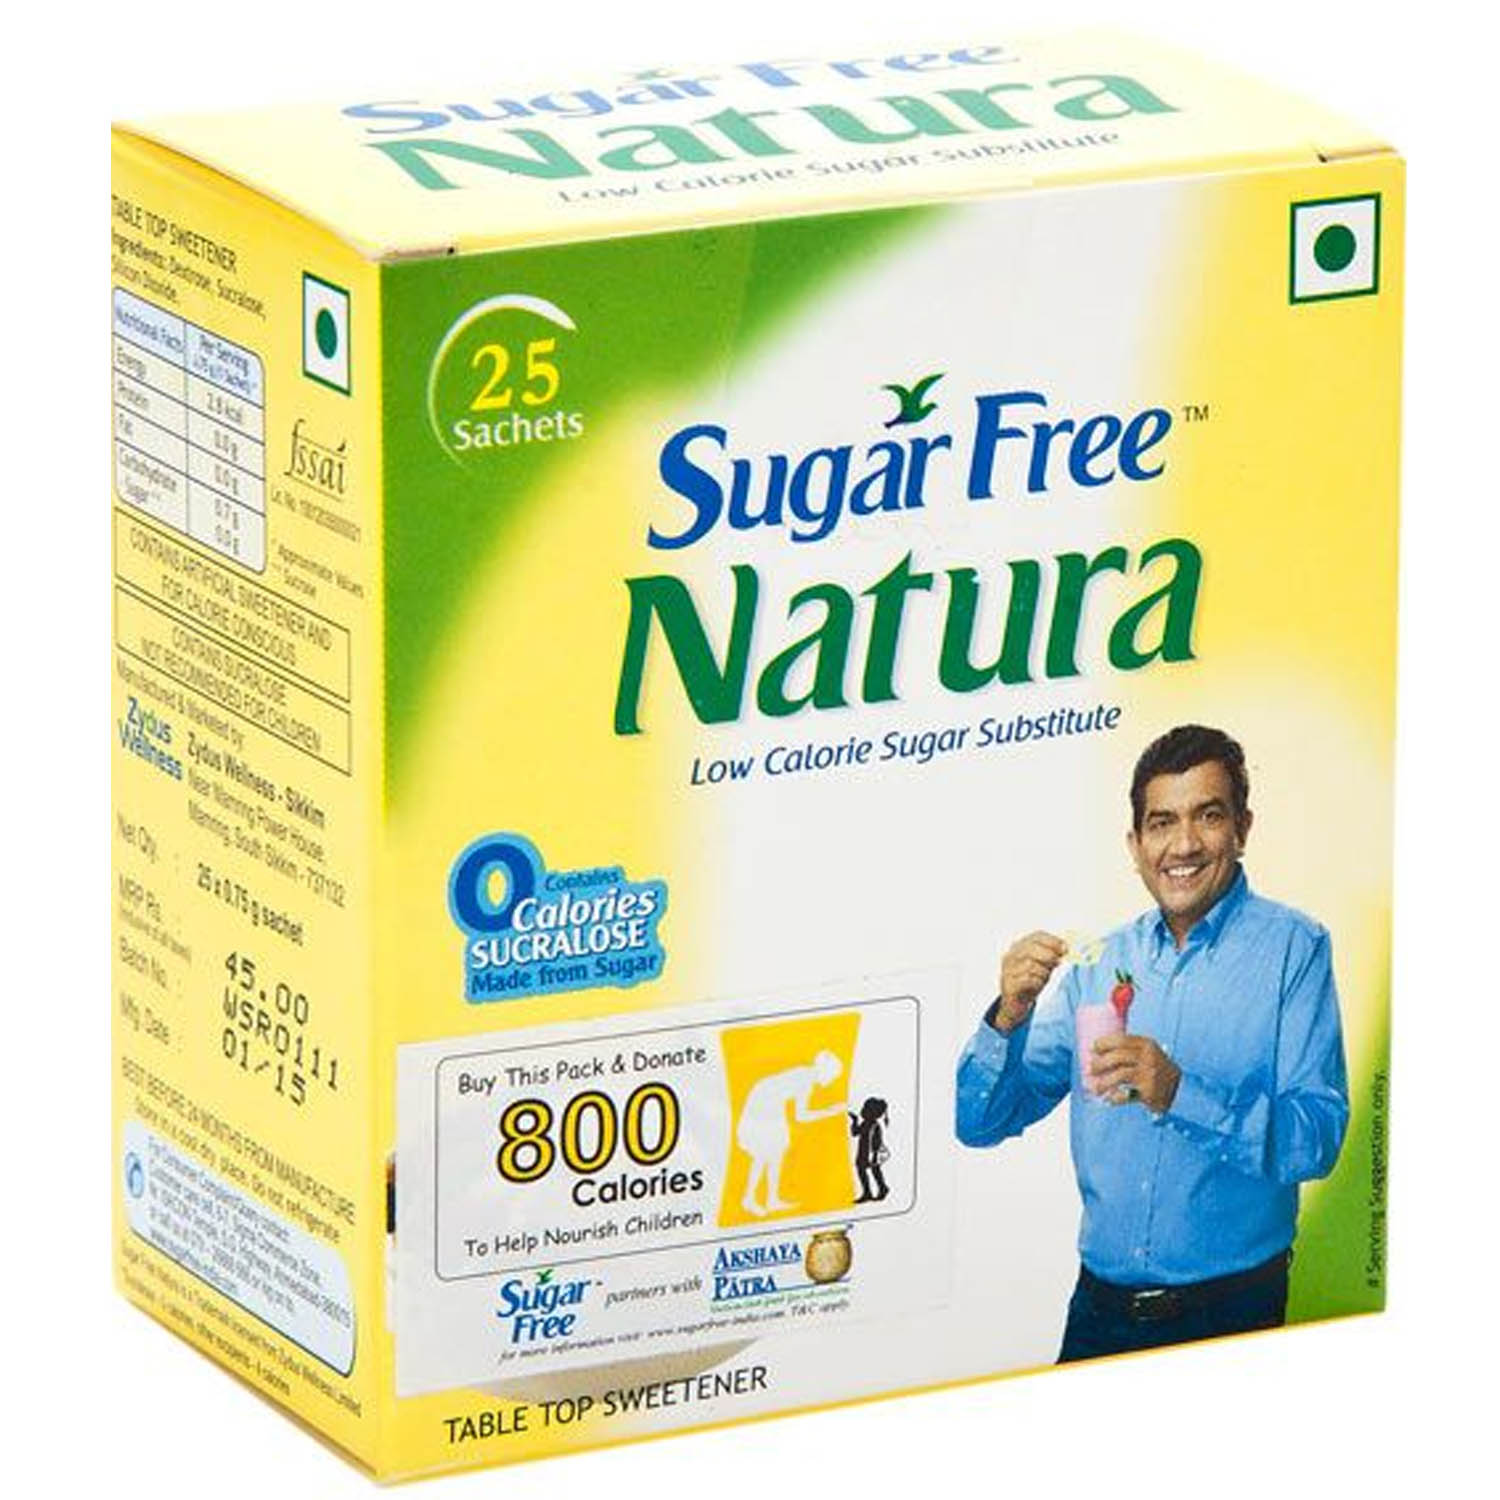 Buy Sugar Free Natura Low Calorie Sugar Substitute 25 gm (25 sachets x 1 gm) Online